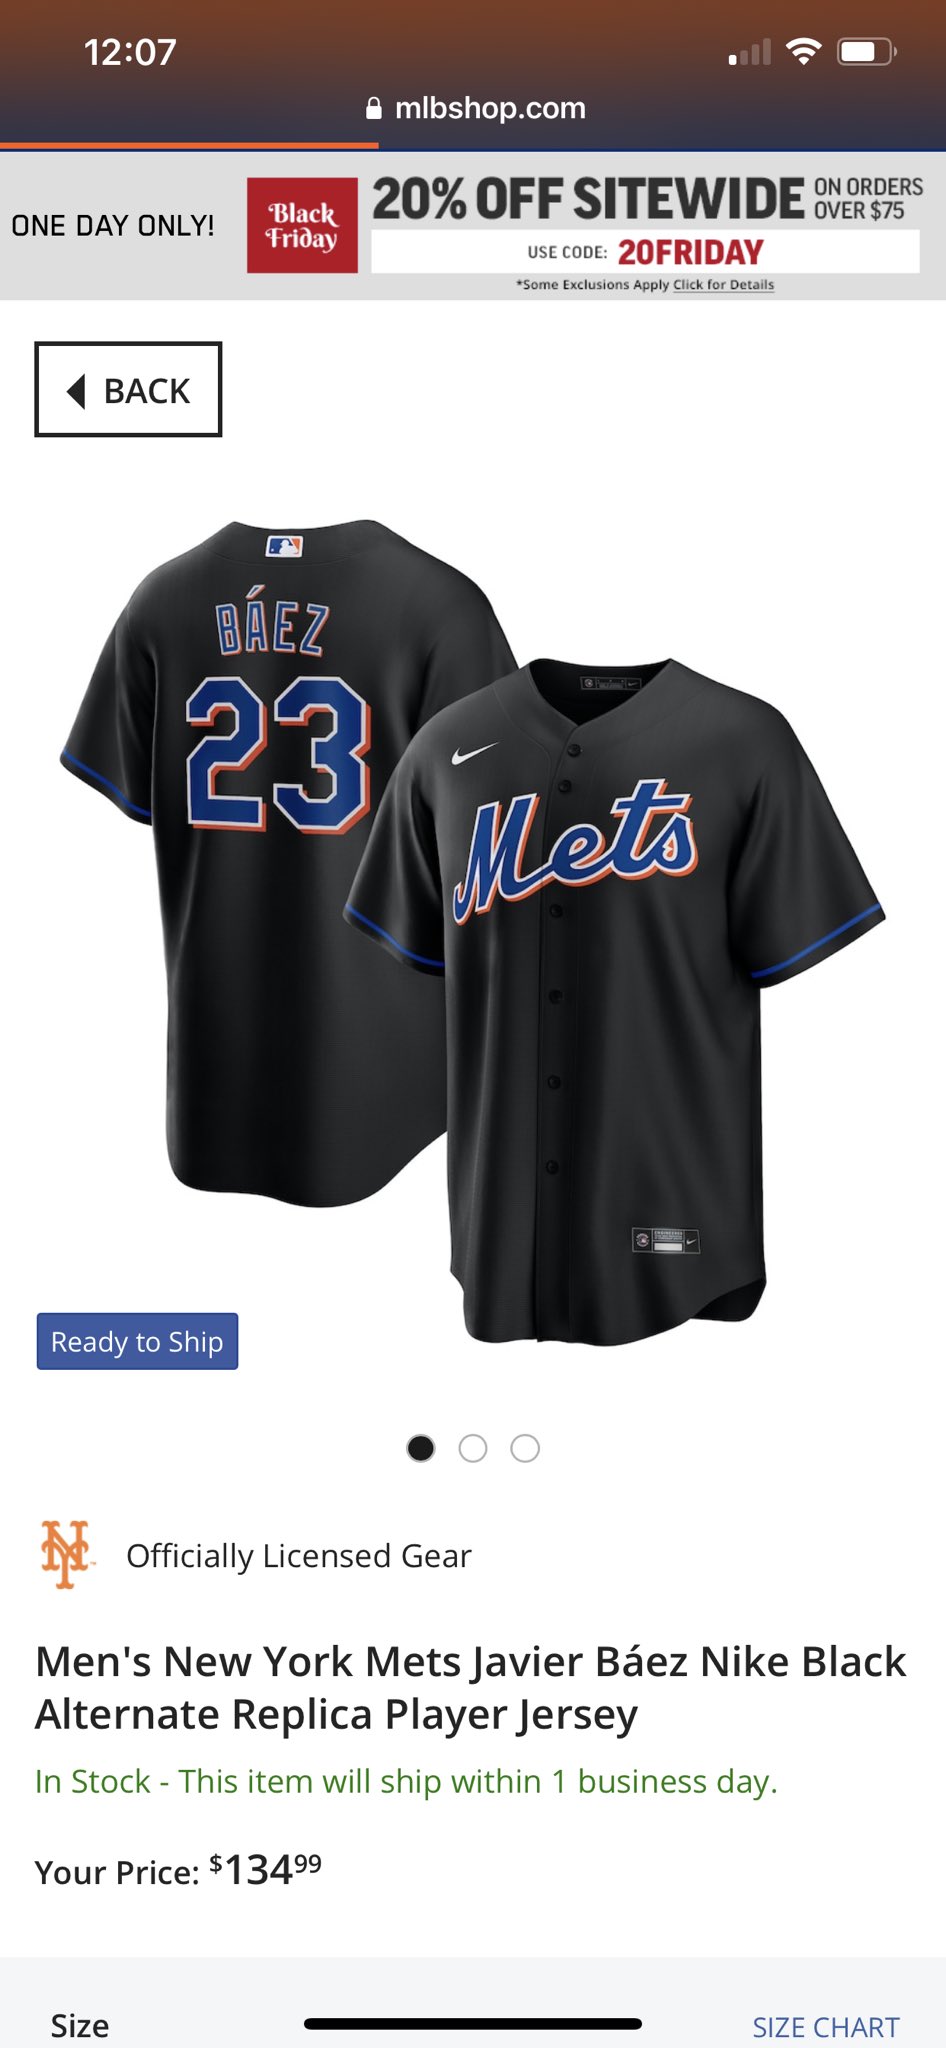 Mets black replica jerseys go on sale on Black Friday